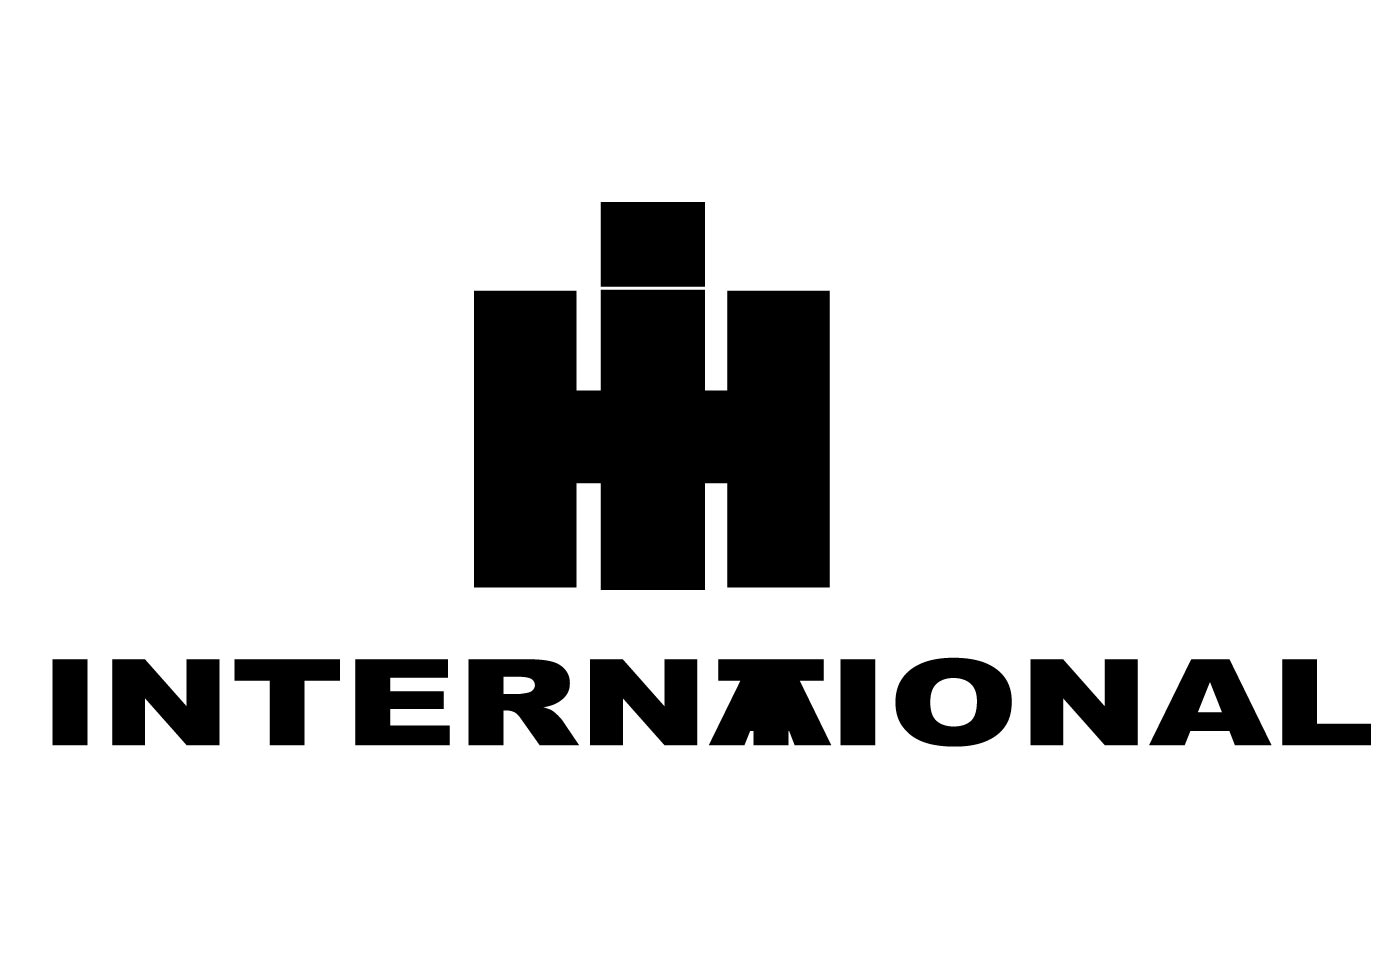 Harvester International Logo - Download Free Vector Art, Stock Graphics ...